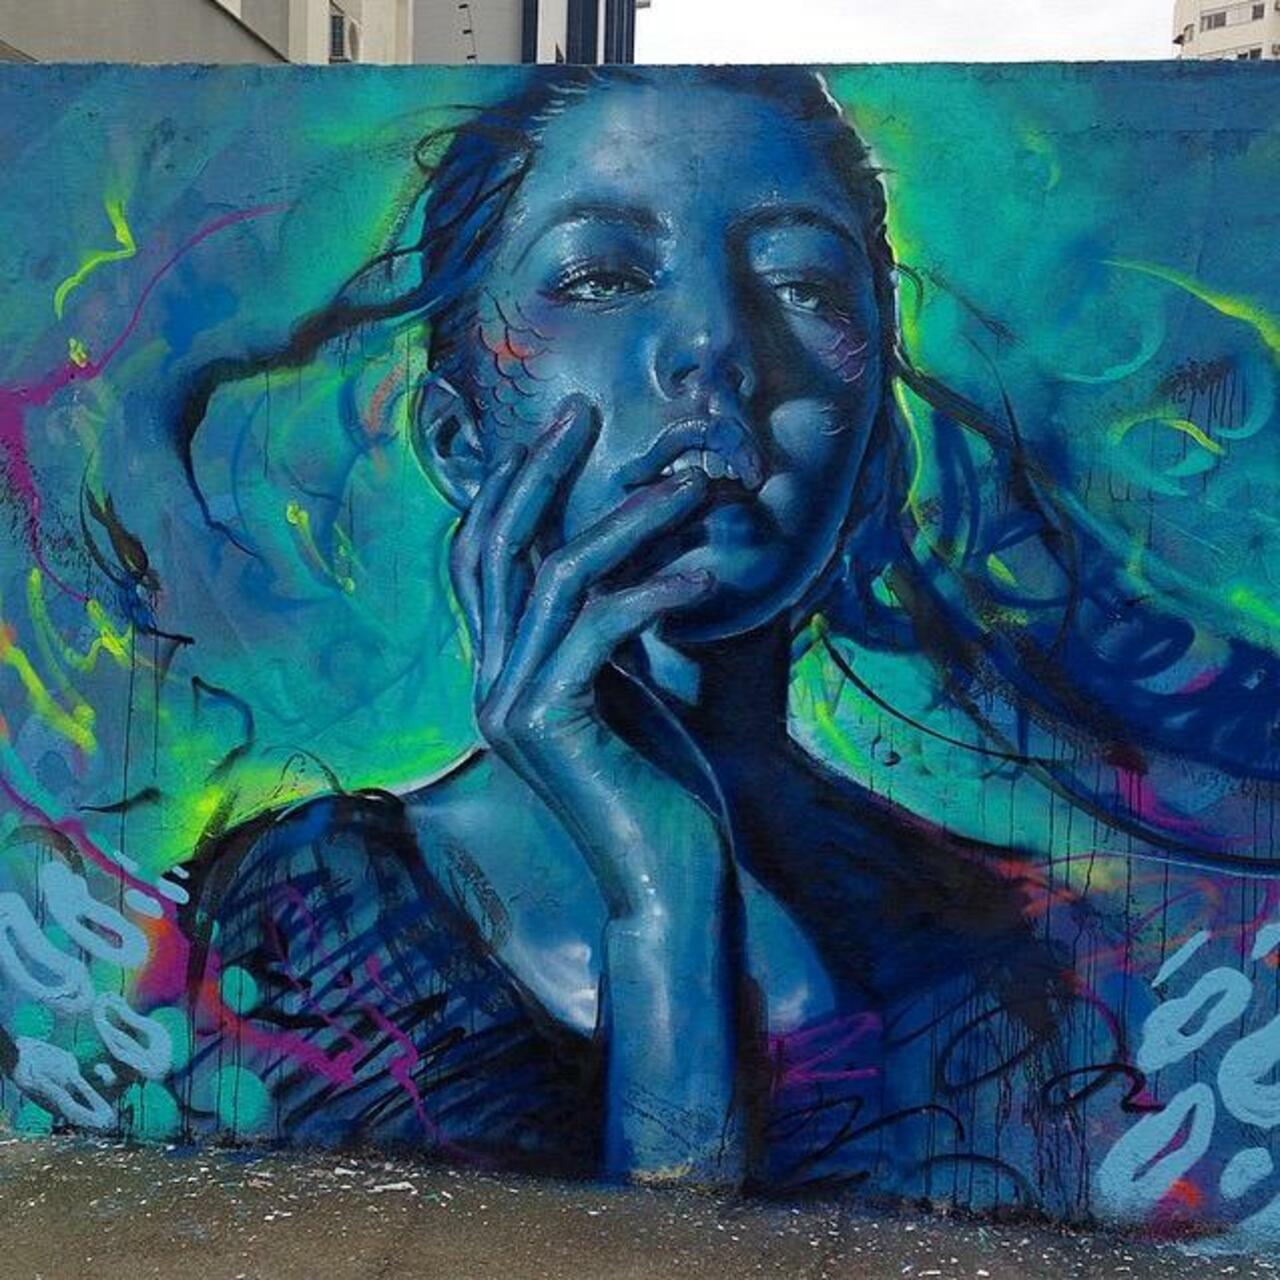 Thiago Valdi new Street Art piece titled 'Day Dreamer' #art #mural #graffiti #streetart http://t.co/3UodbQm48I …… http://twitter.com/GoogleStreetArt/status/652604458048876544/photo/1/large?utm_source=fb&utm_medium=fb&utm_campaign=charlesjackso14&utm_content=652732462272000000